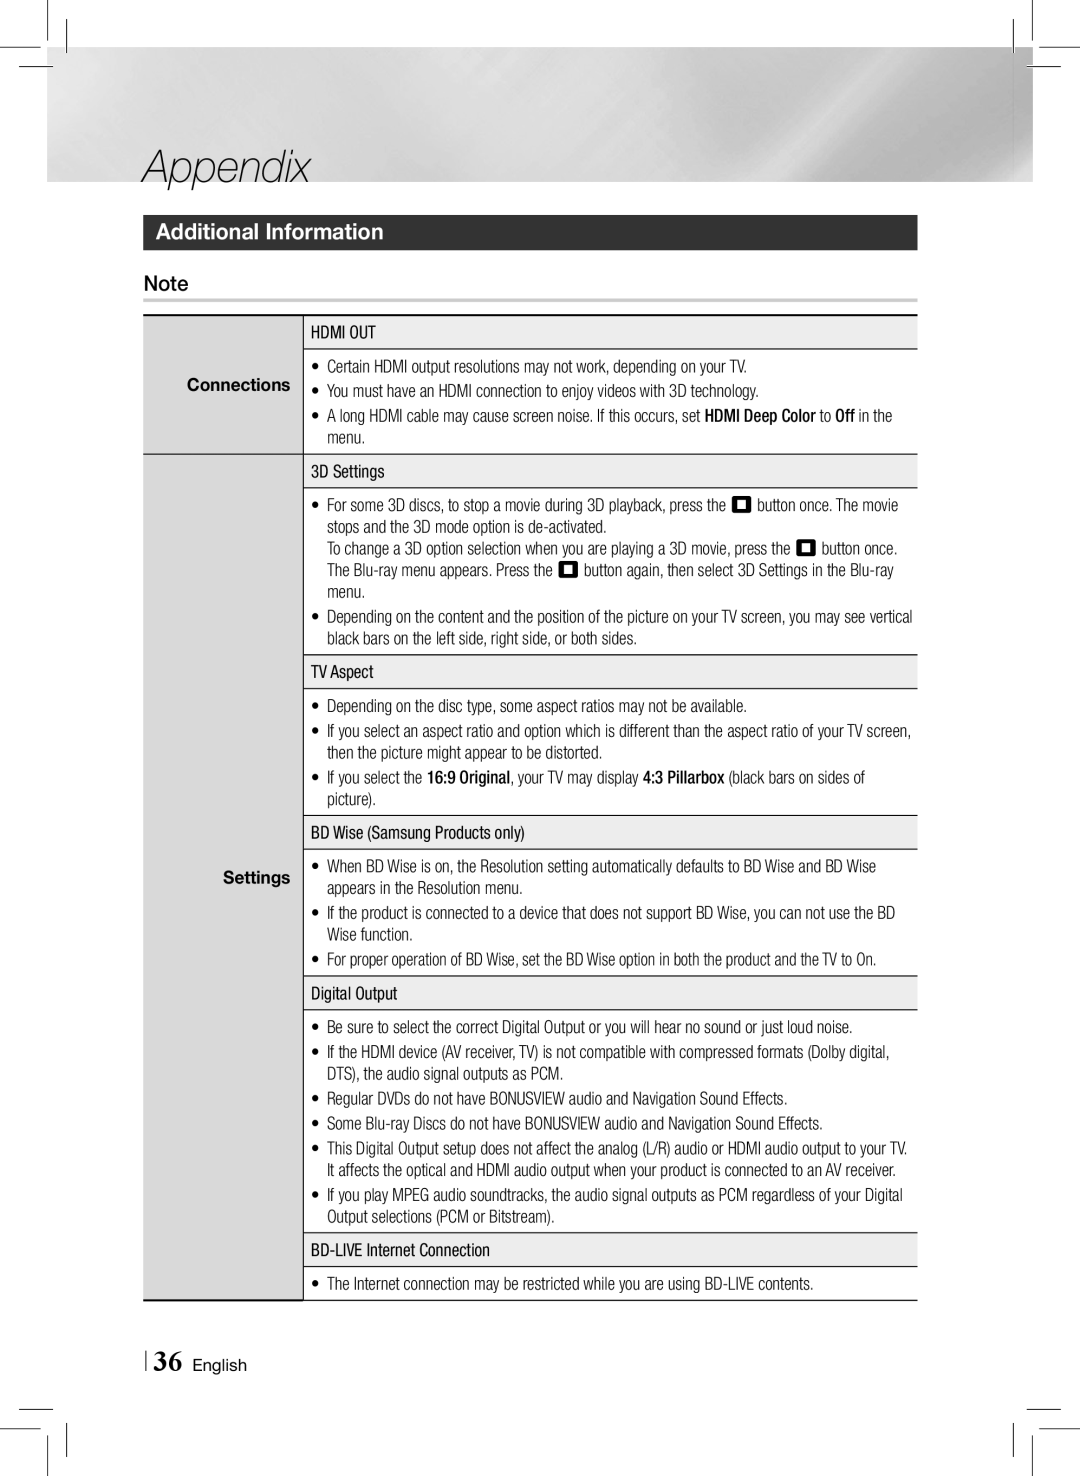 Samsung HTE3500ZA user manual Appendix, Additional Information, Settings 